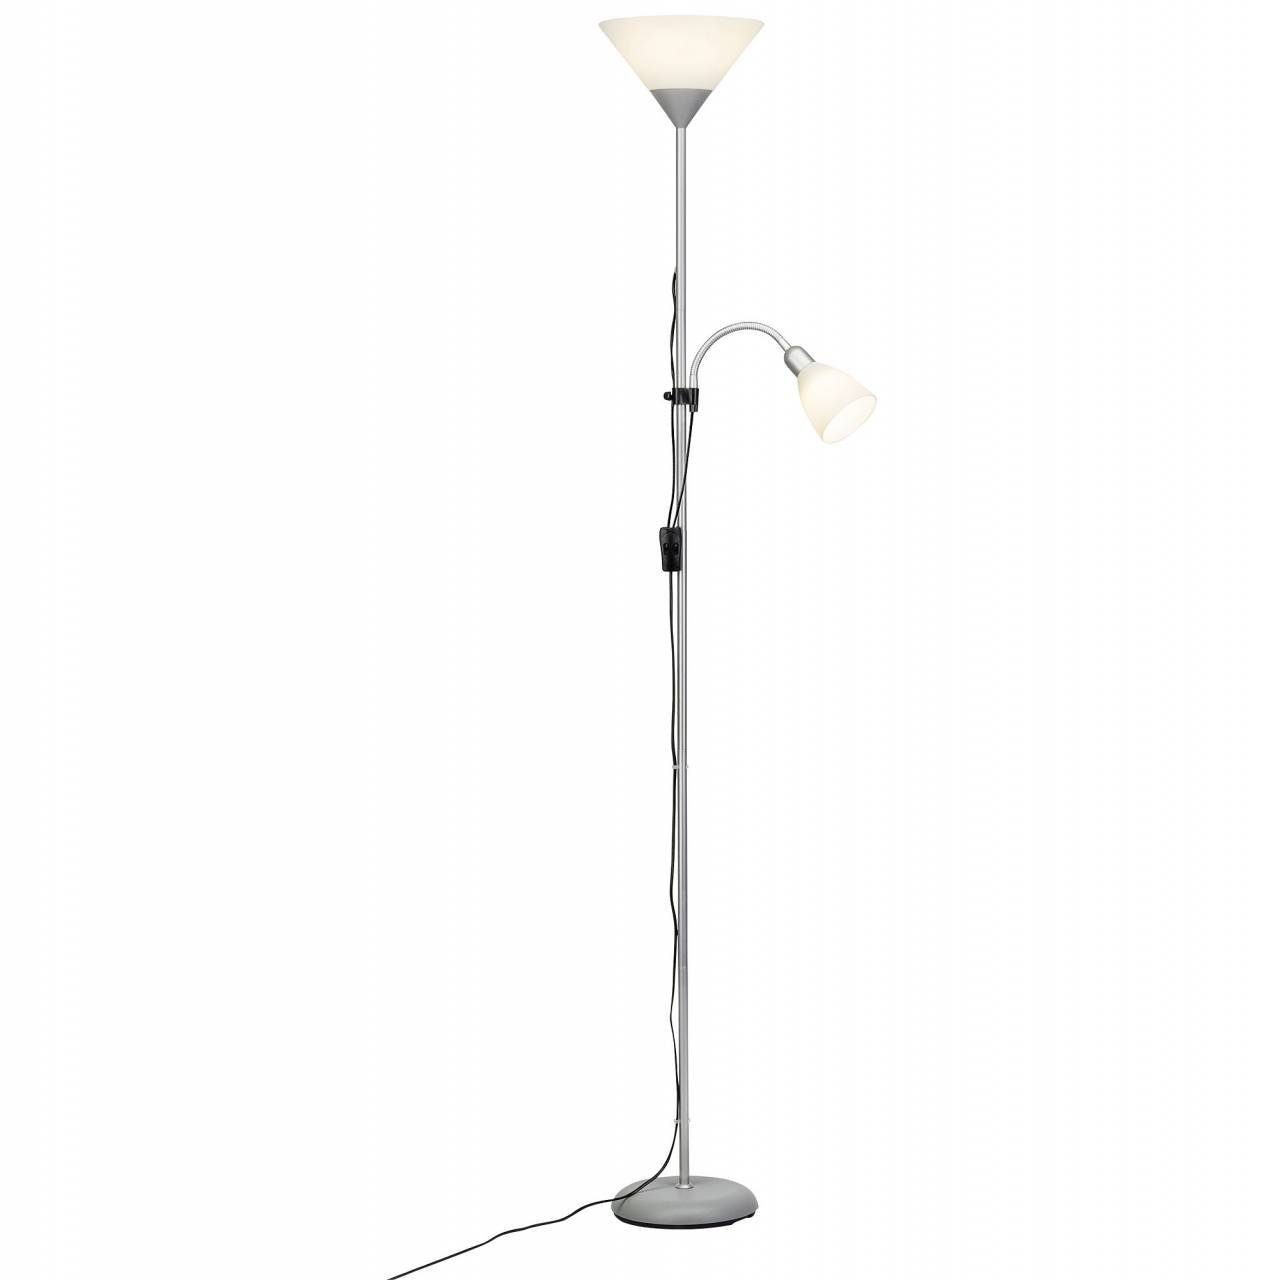 Brilliant Stehlampe Spari, 2700K, Lampe LED-A60, silber/weiß Deckenfluter 9. E27, Spari 1x LED Lesearm